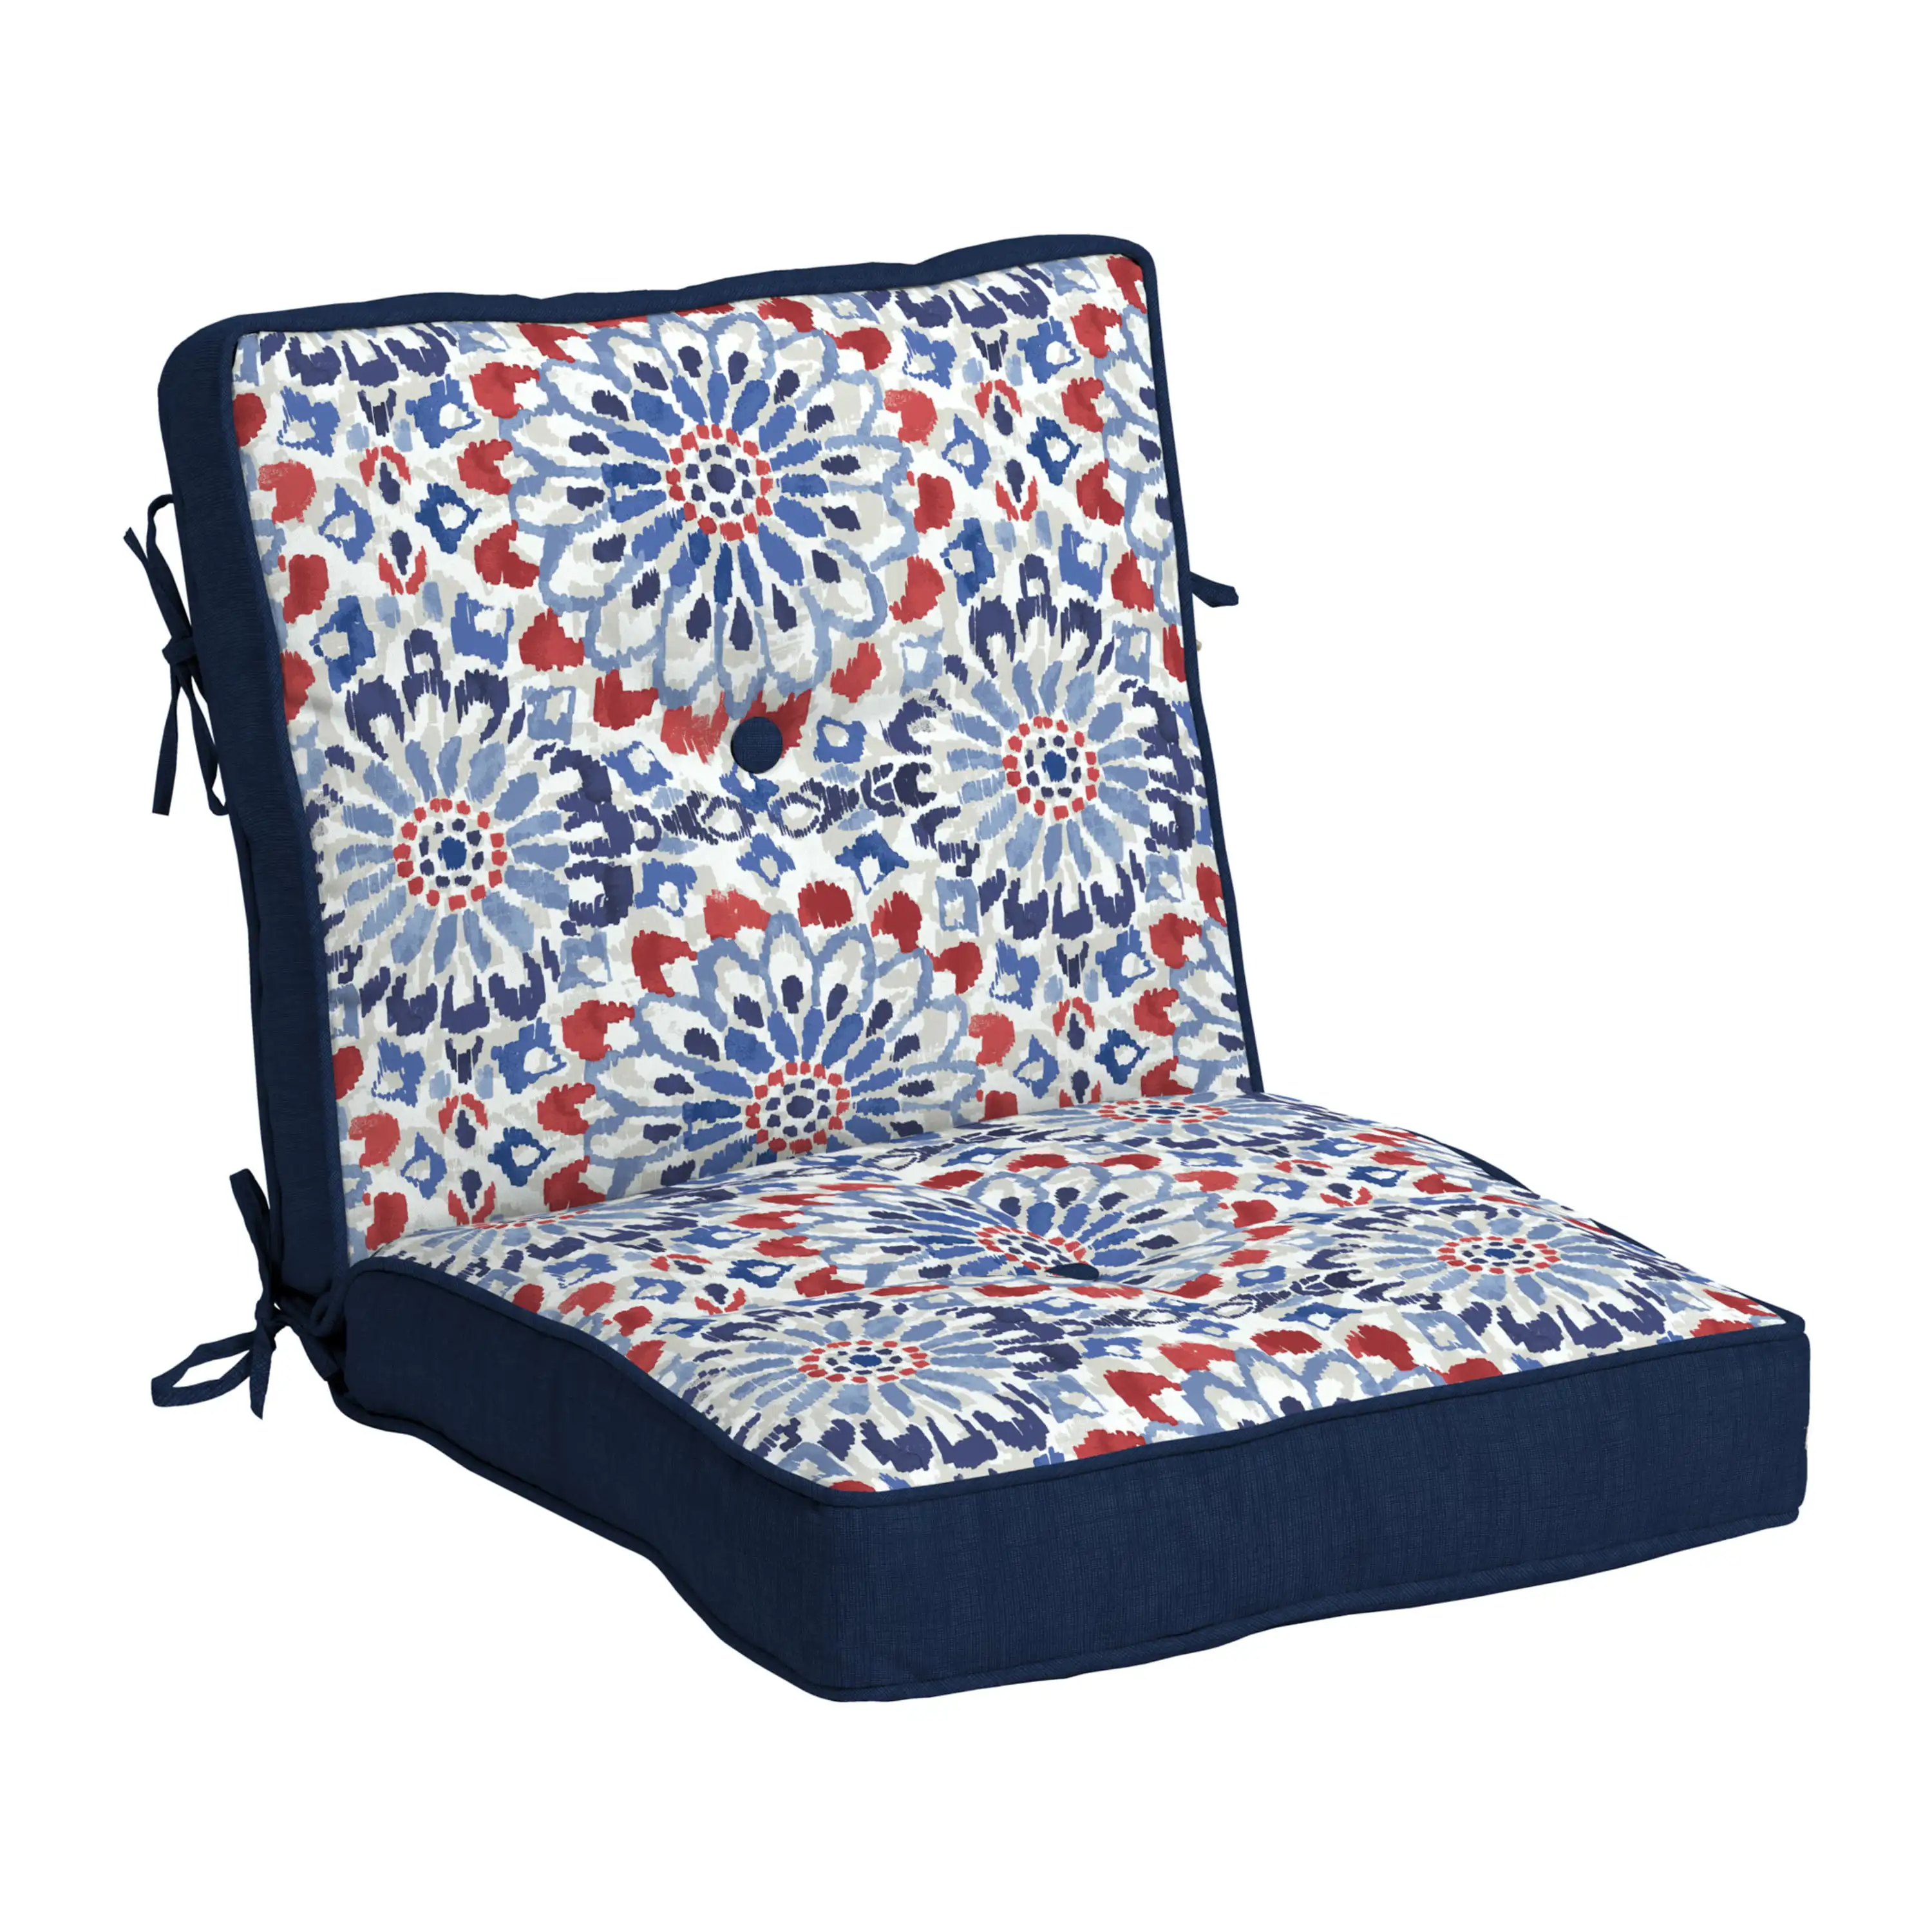 

Arden Selections PolyFill Outdoor Chair Cushion 20 x 21, Clark Blue